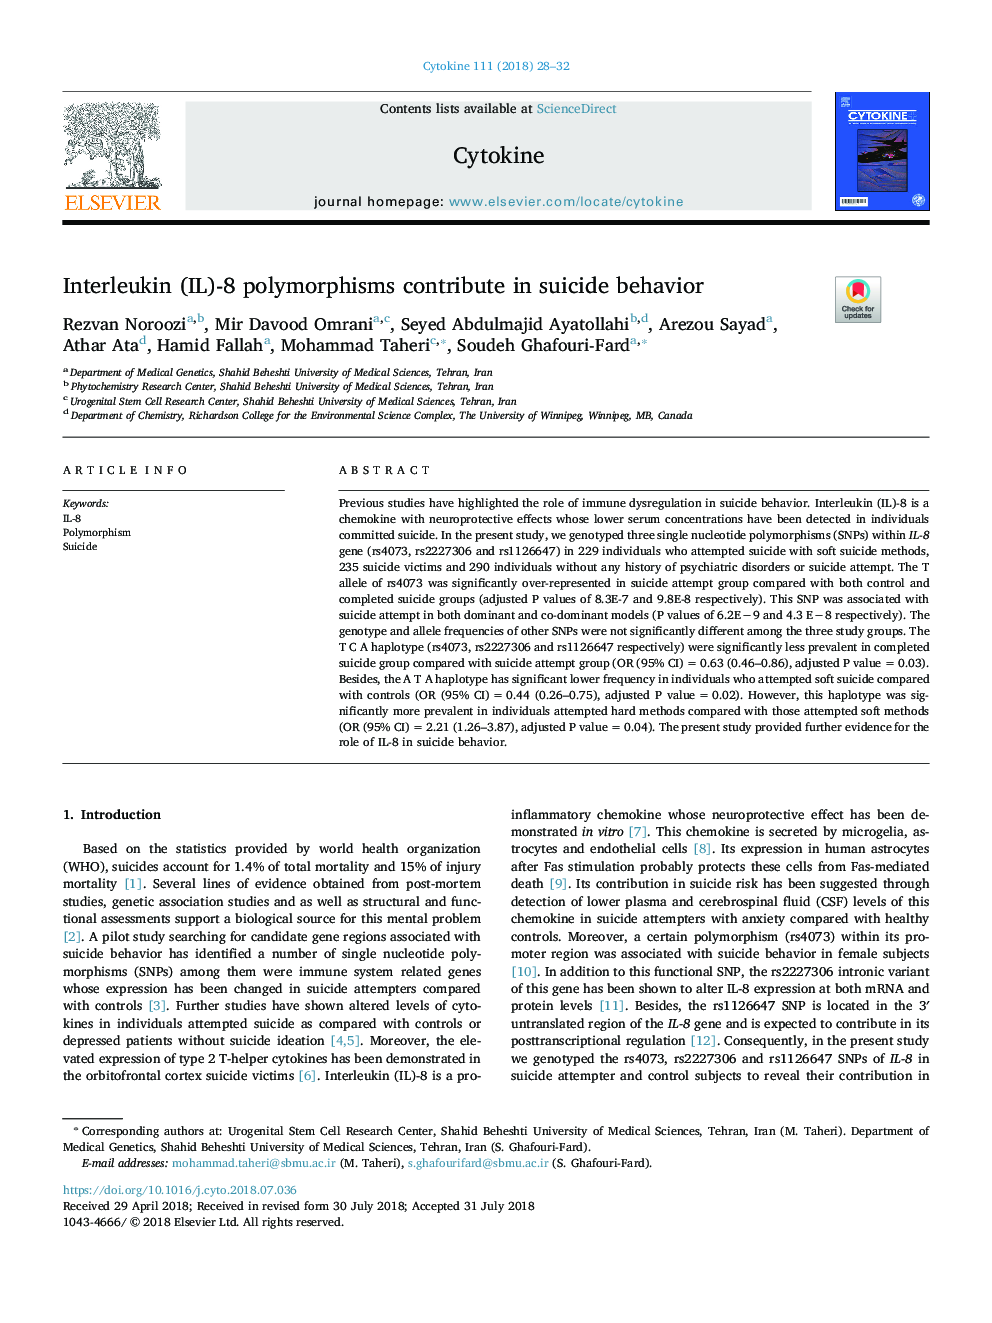 Interleukin (IL)-8 polymorphisms contribute in suicide behavior